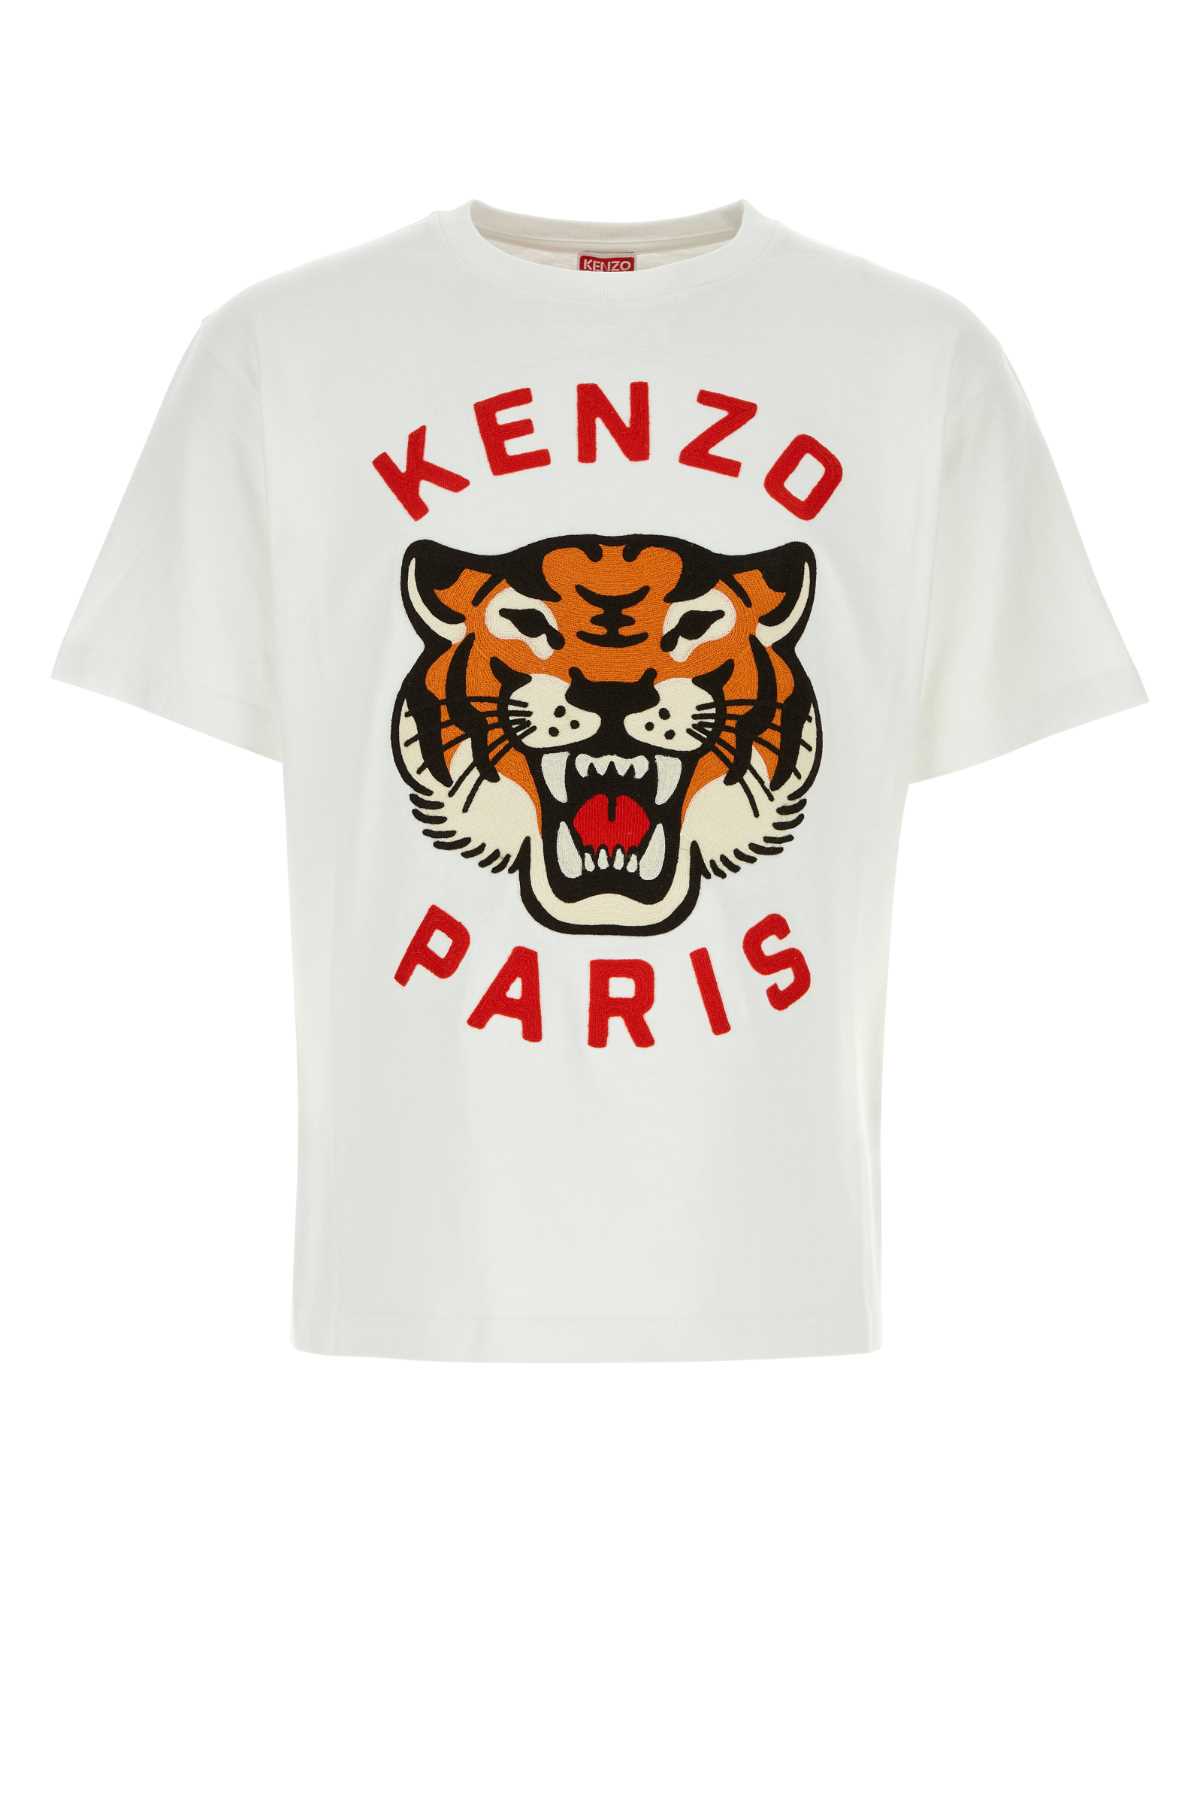 Kenzo White Cotton Oversize T-shirt